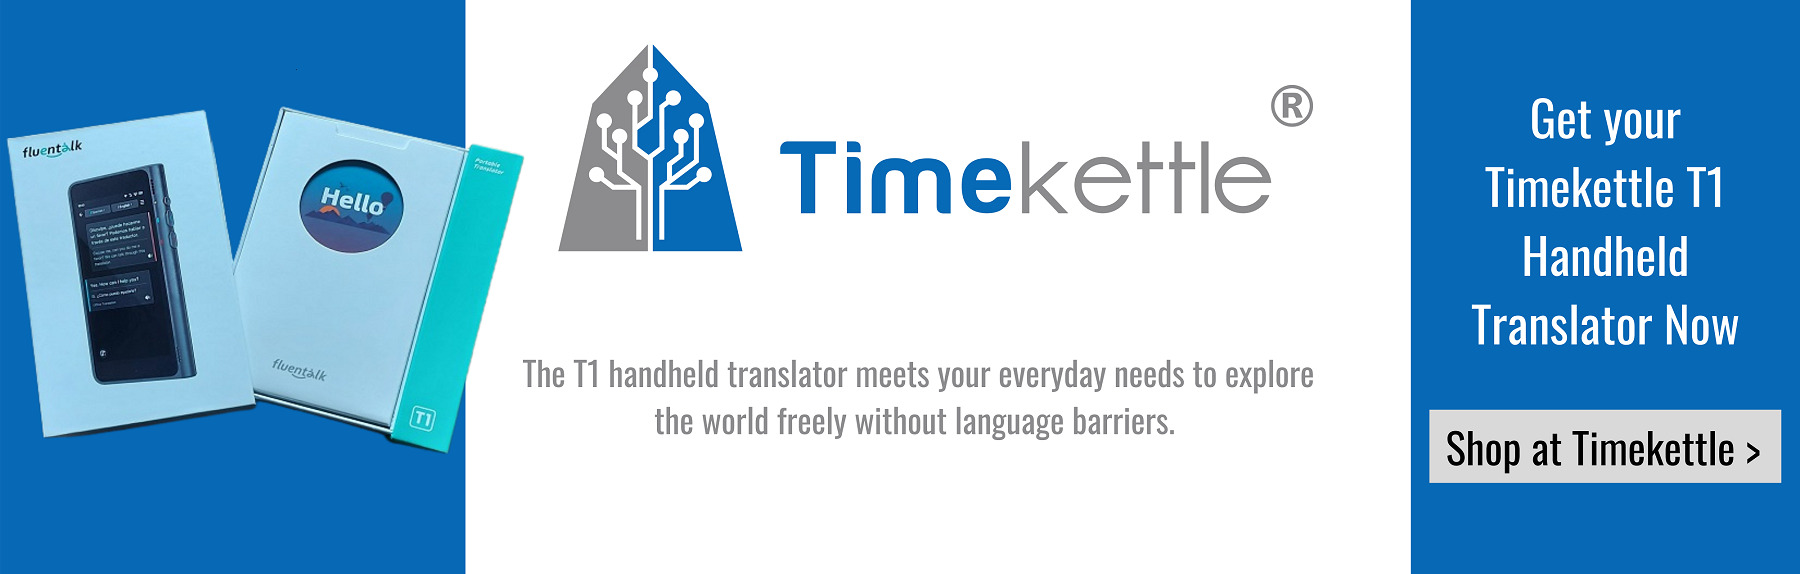 Fluentalk T1 Mini by Timekettle review - Don't speak the language